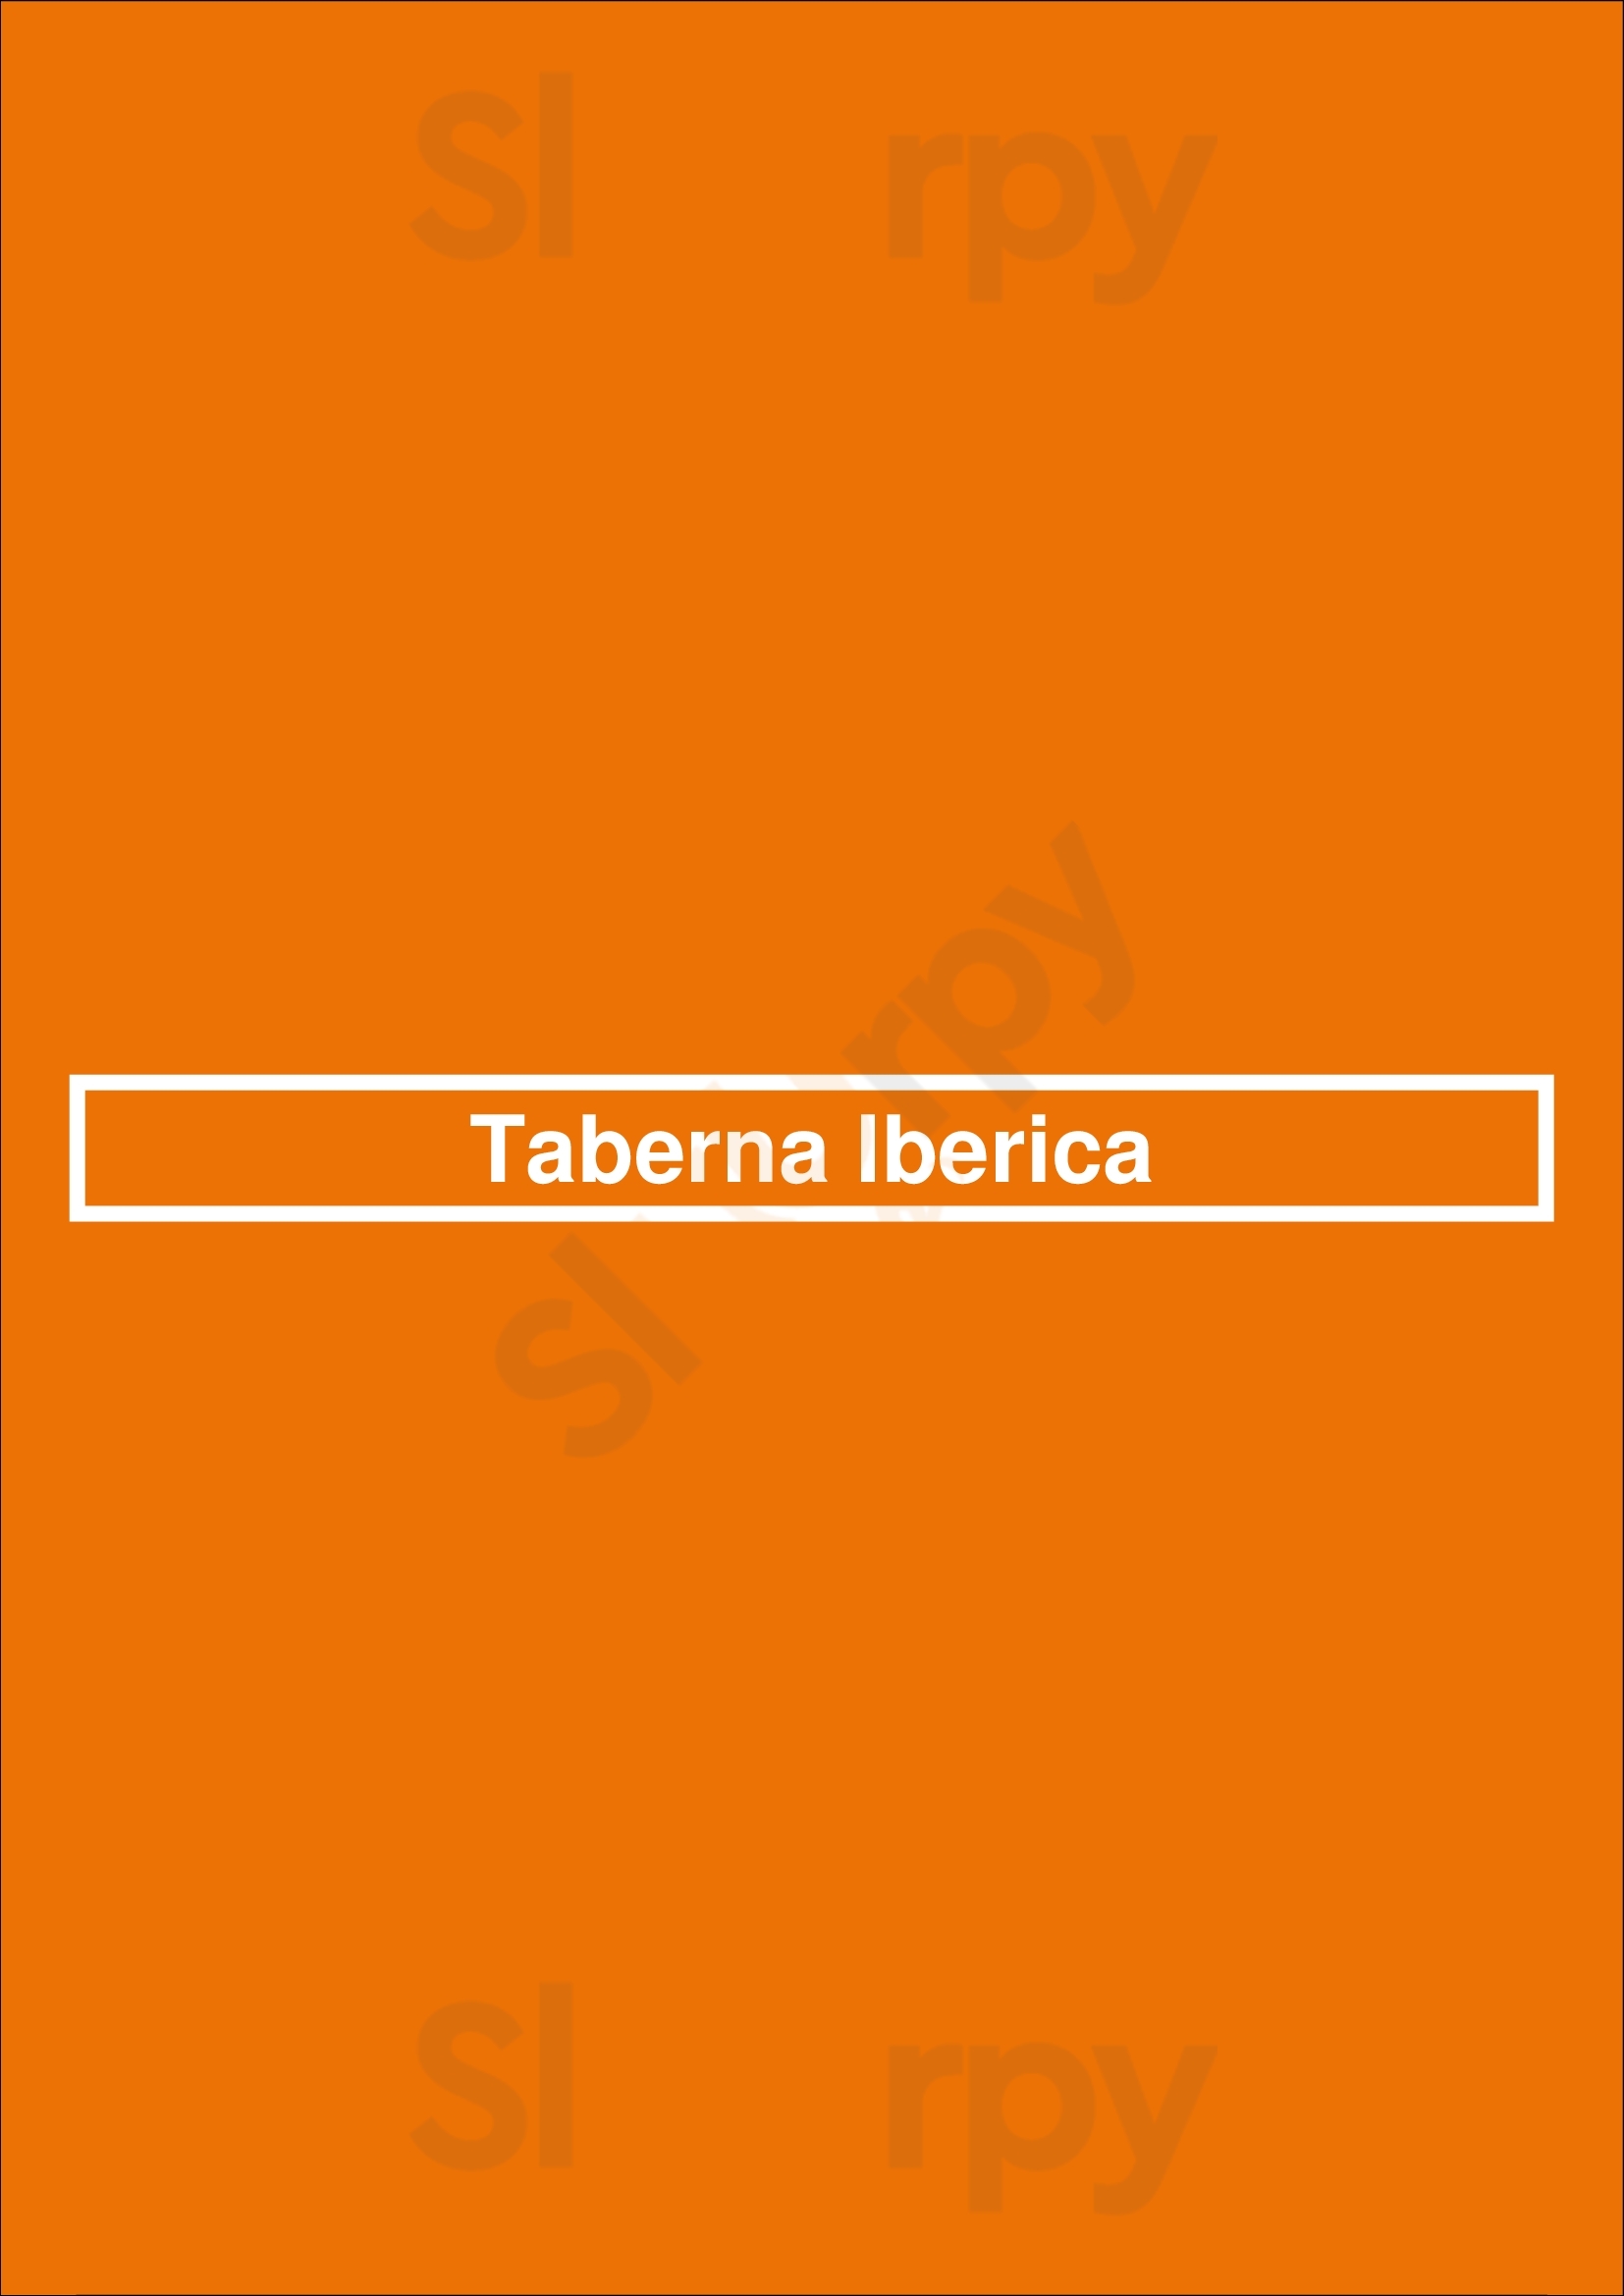 Taberna Iberica Lisboa Menu - 1